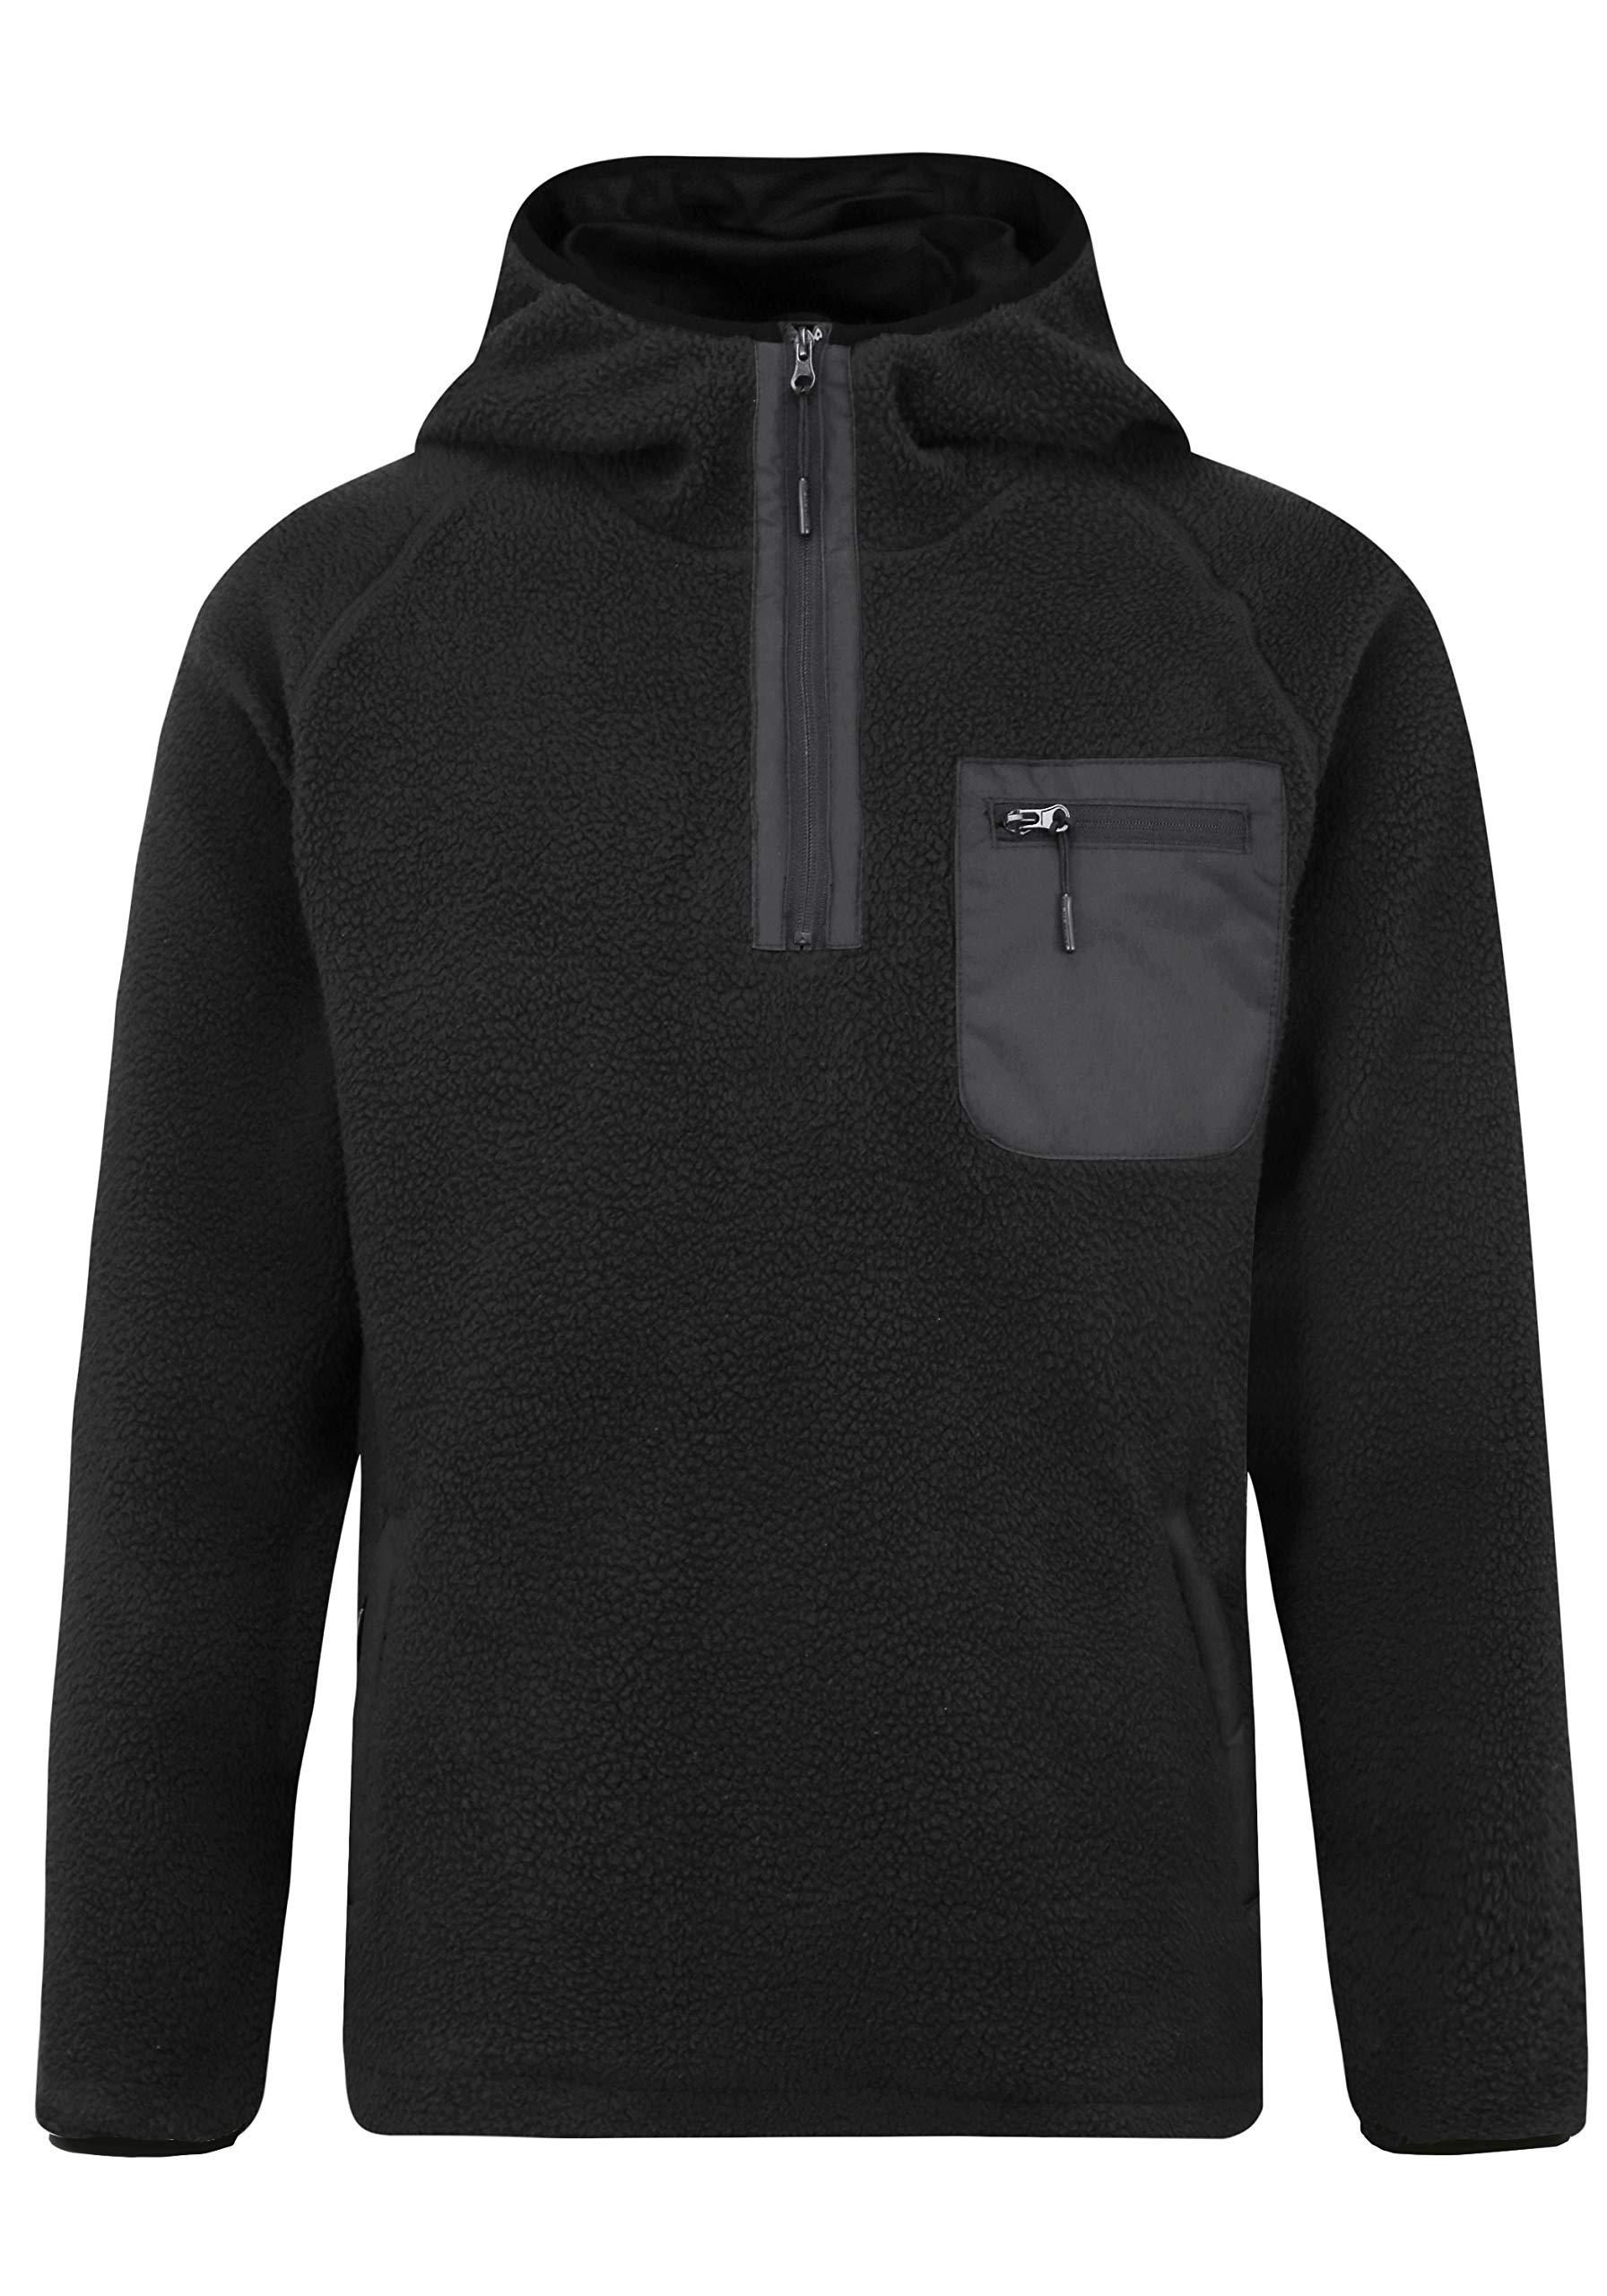 Indicode Trent Herren Fleecejacke Sweatjacke Jacke mit Kapuze, Größe:XL, Farbe:Black (999)